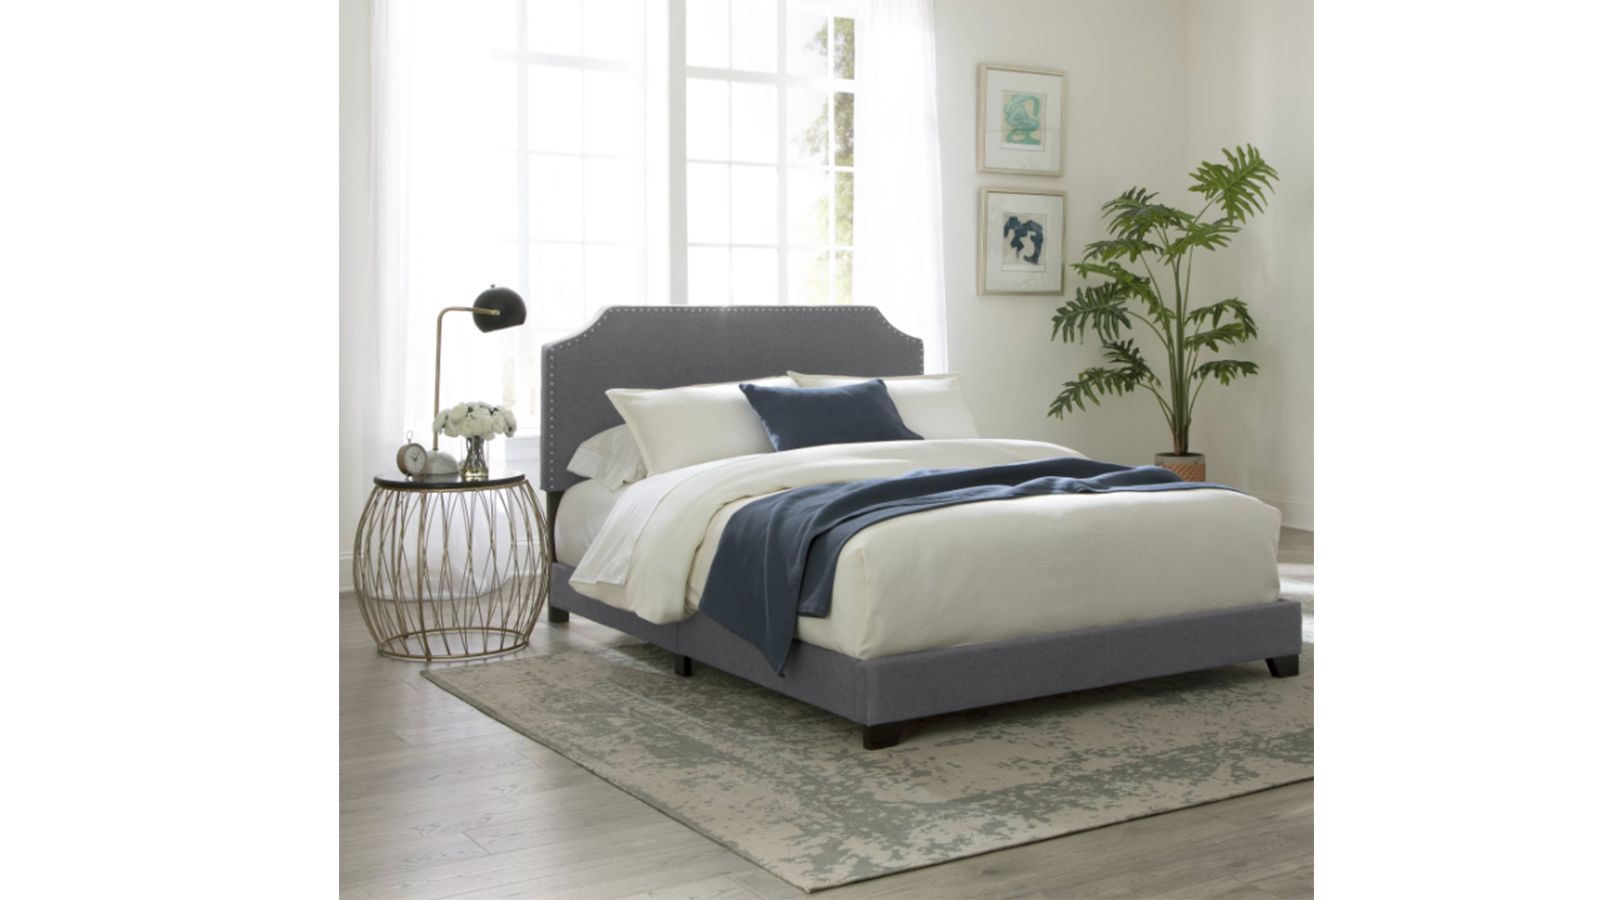 Bed Frames At Wayfair Cnn, Wayfair Grey Bed Frame With Storage